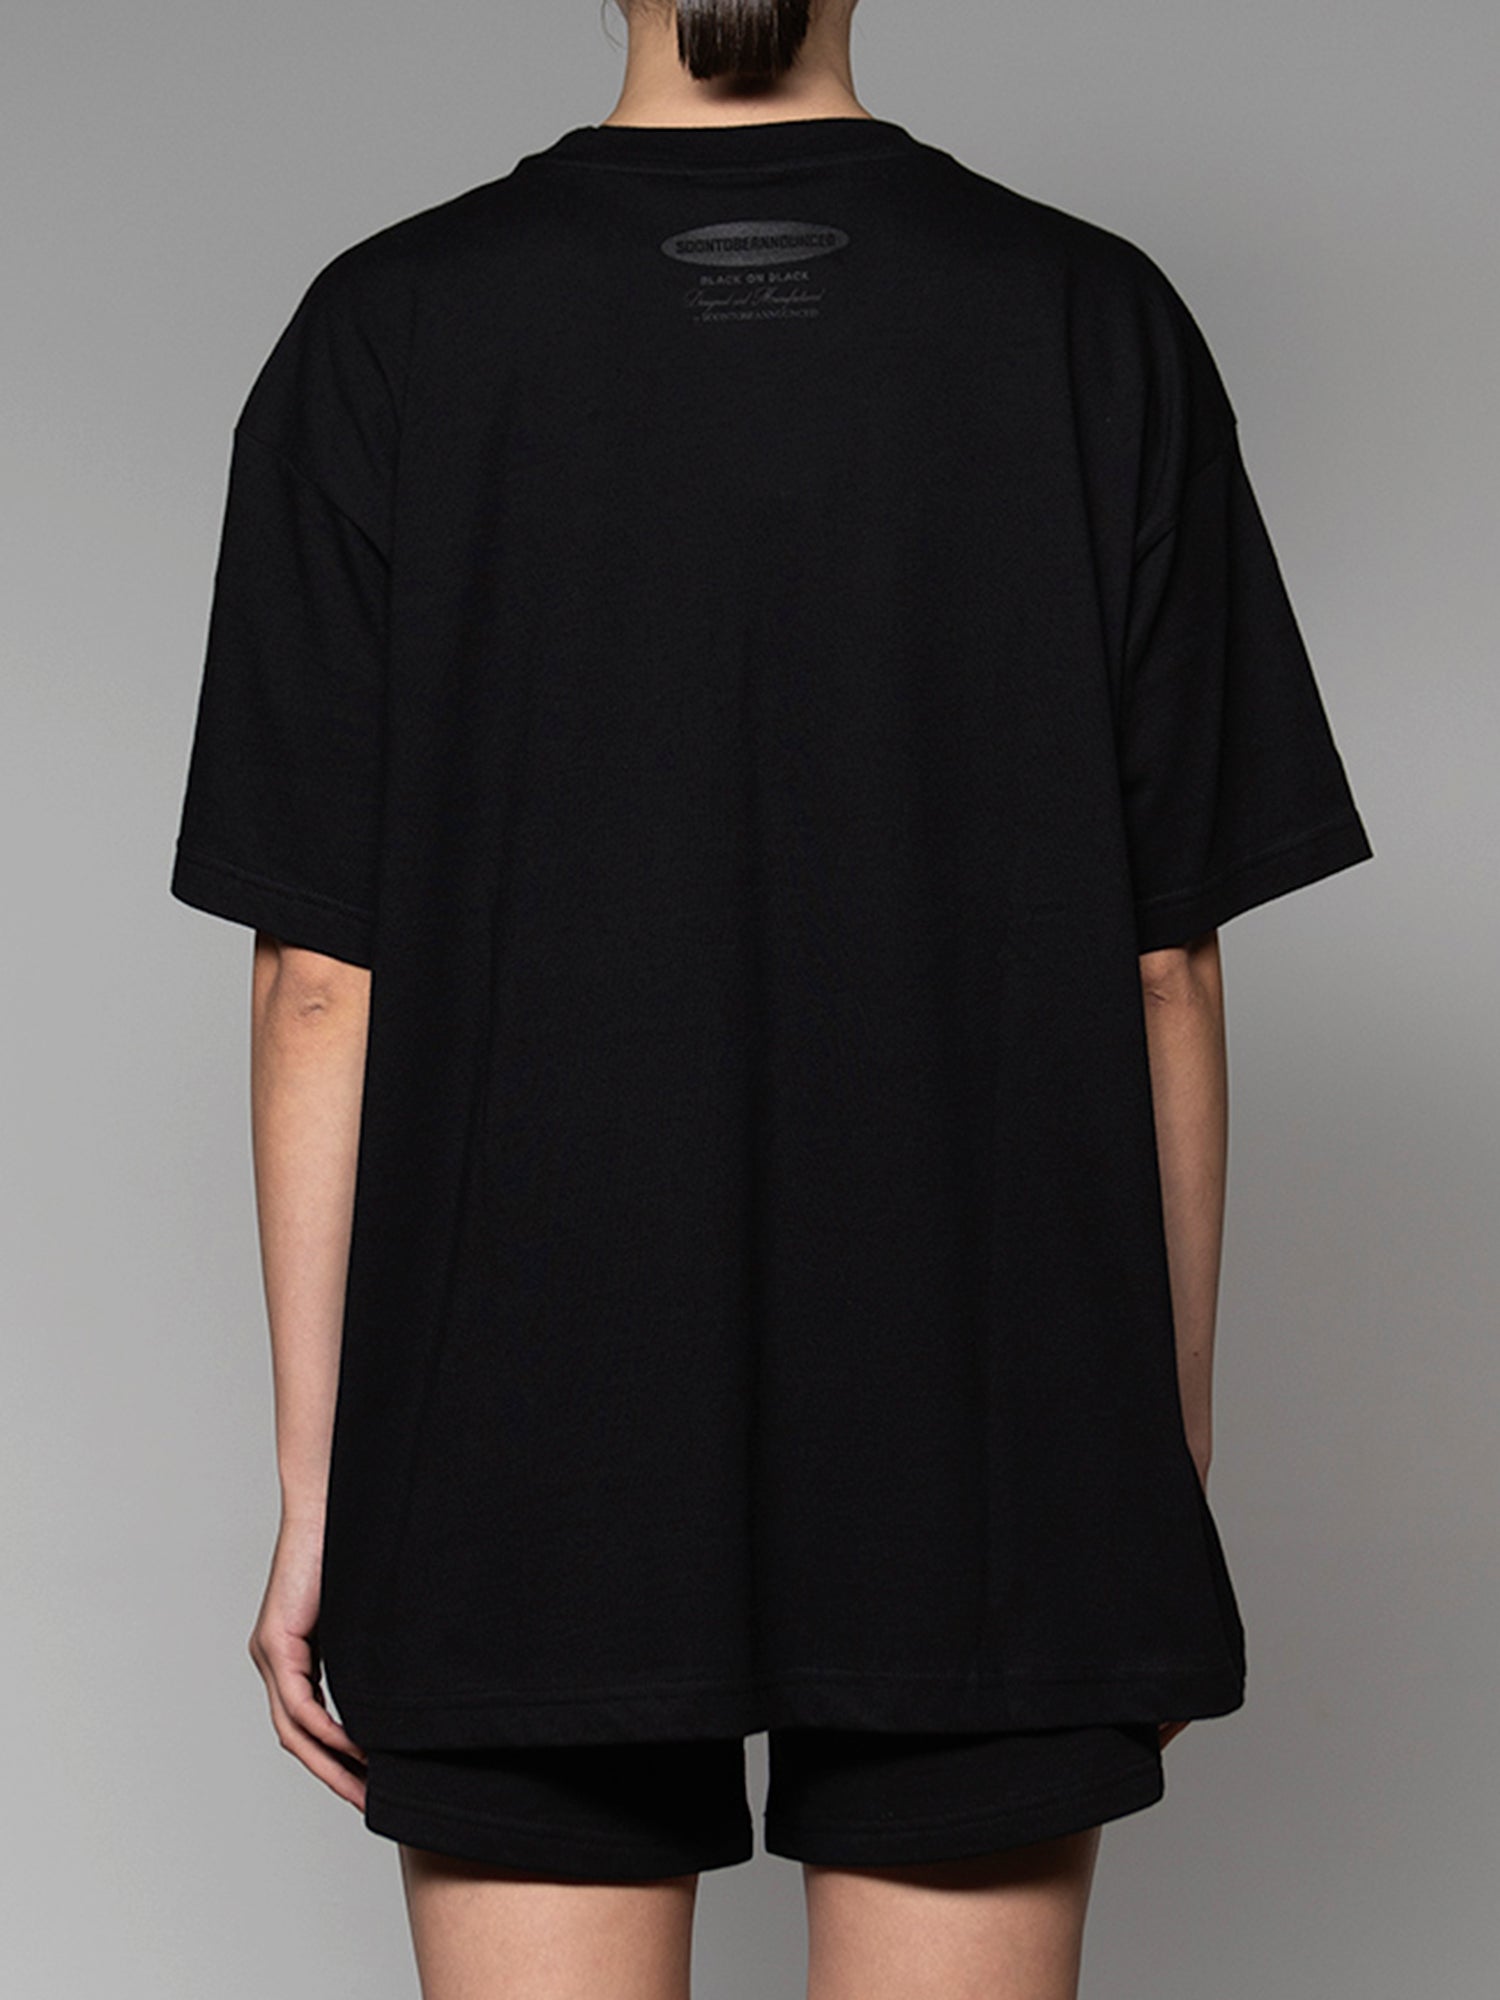 Black on Black S/S T-Shirt